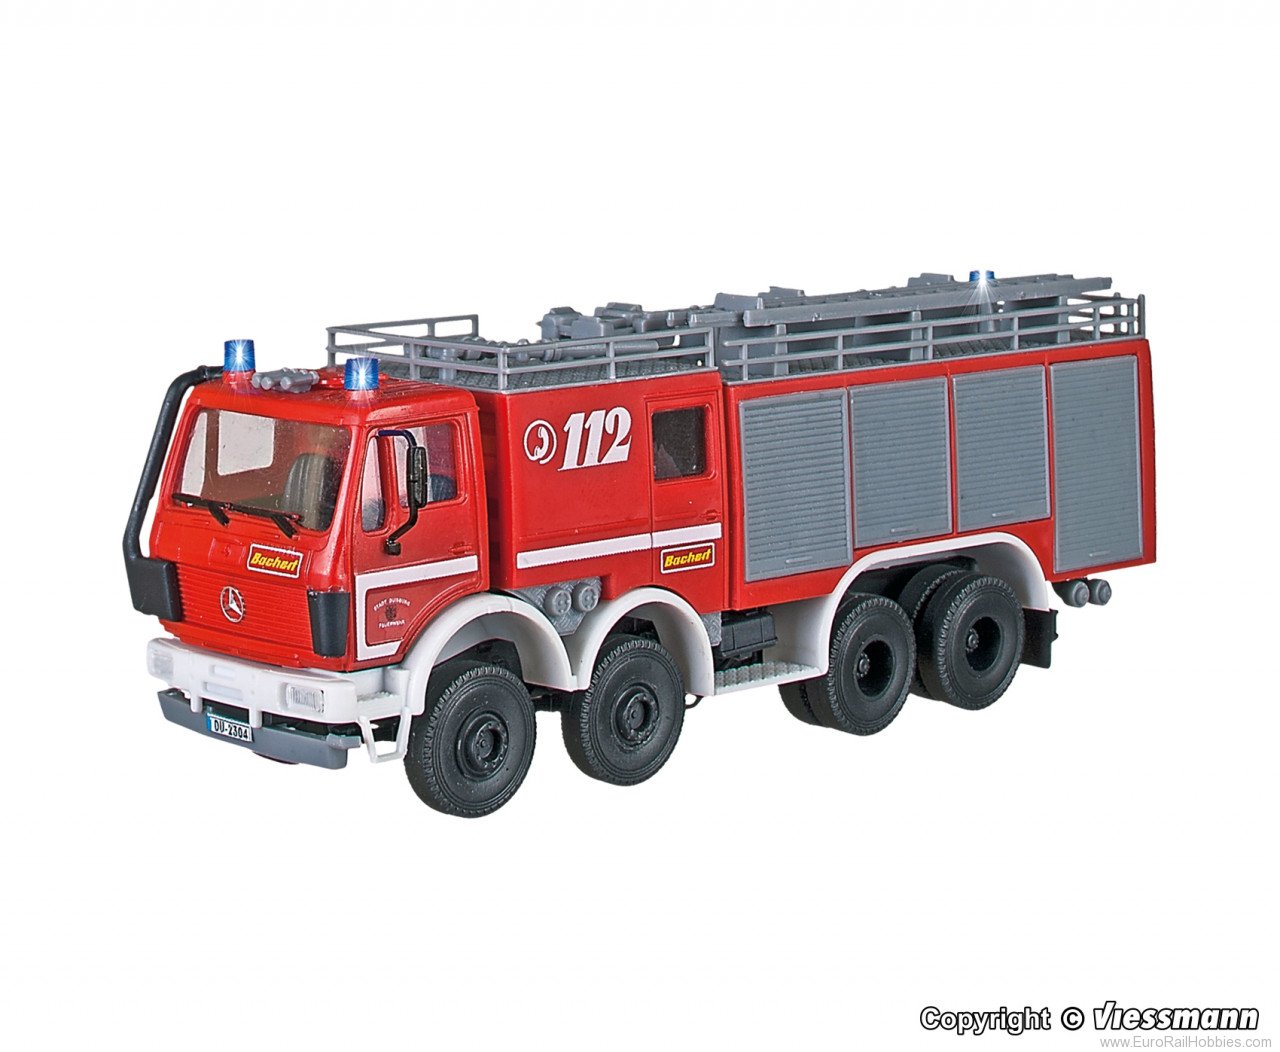 Viessmann 1125 H0 Fire engine with 3 blue lights, functional